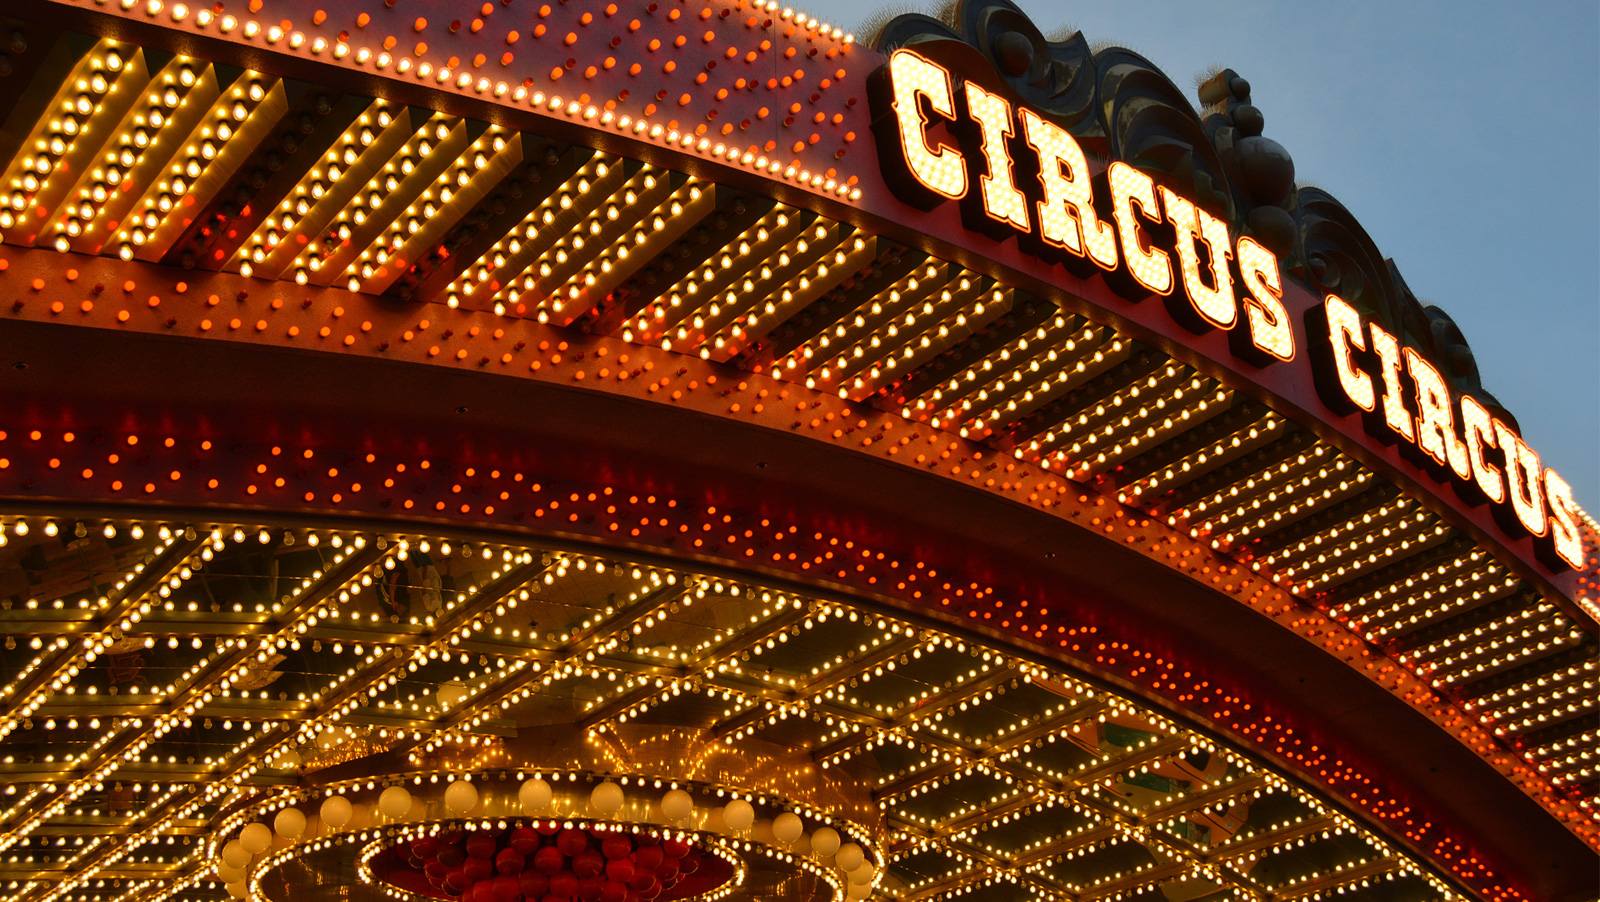 Nevada gaming regulators say yes to Circus Circus sale